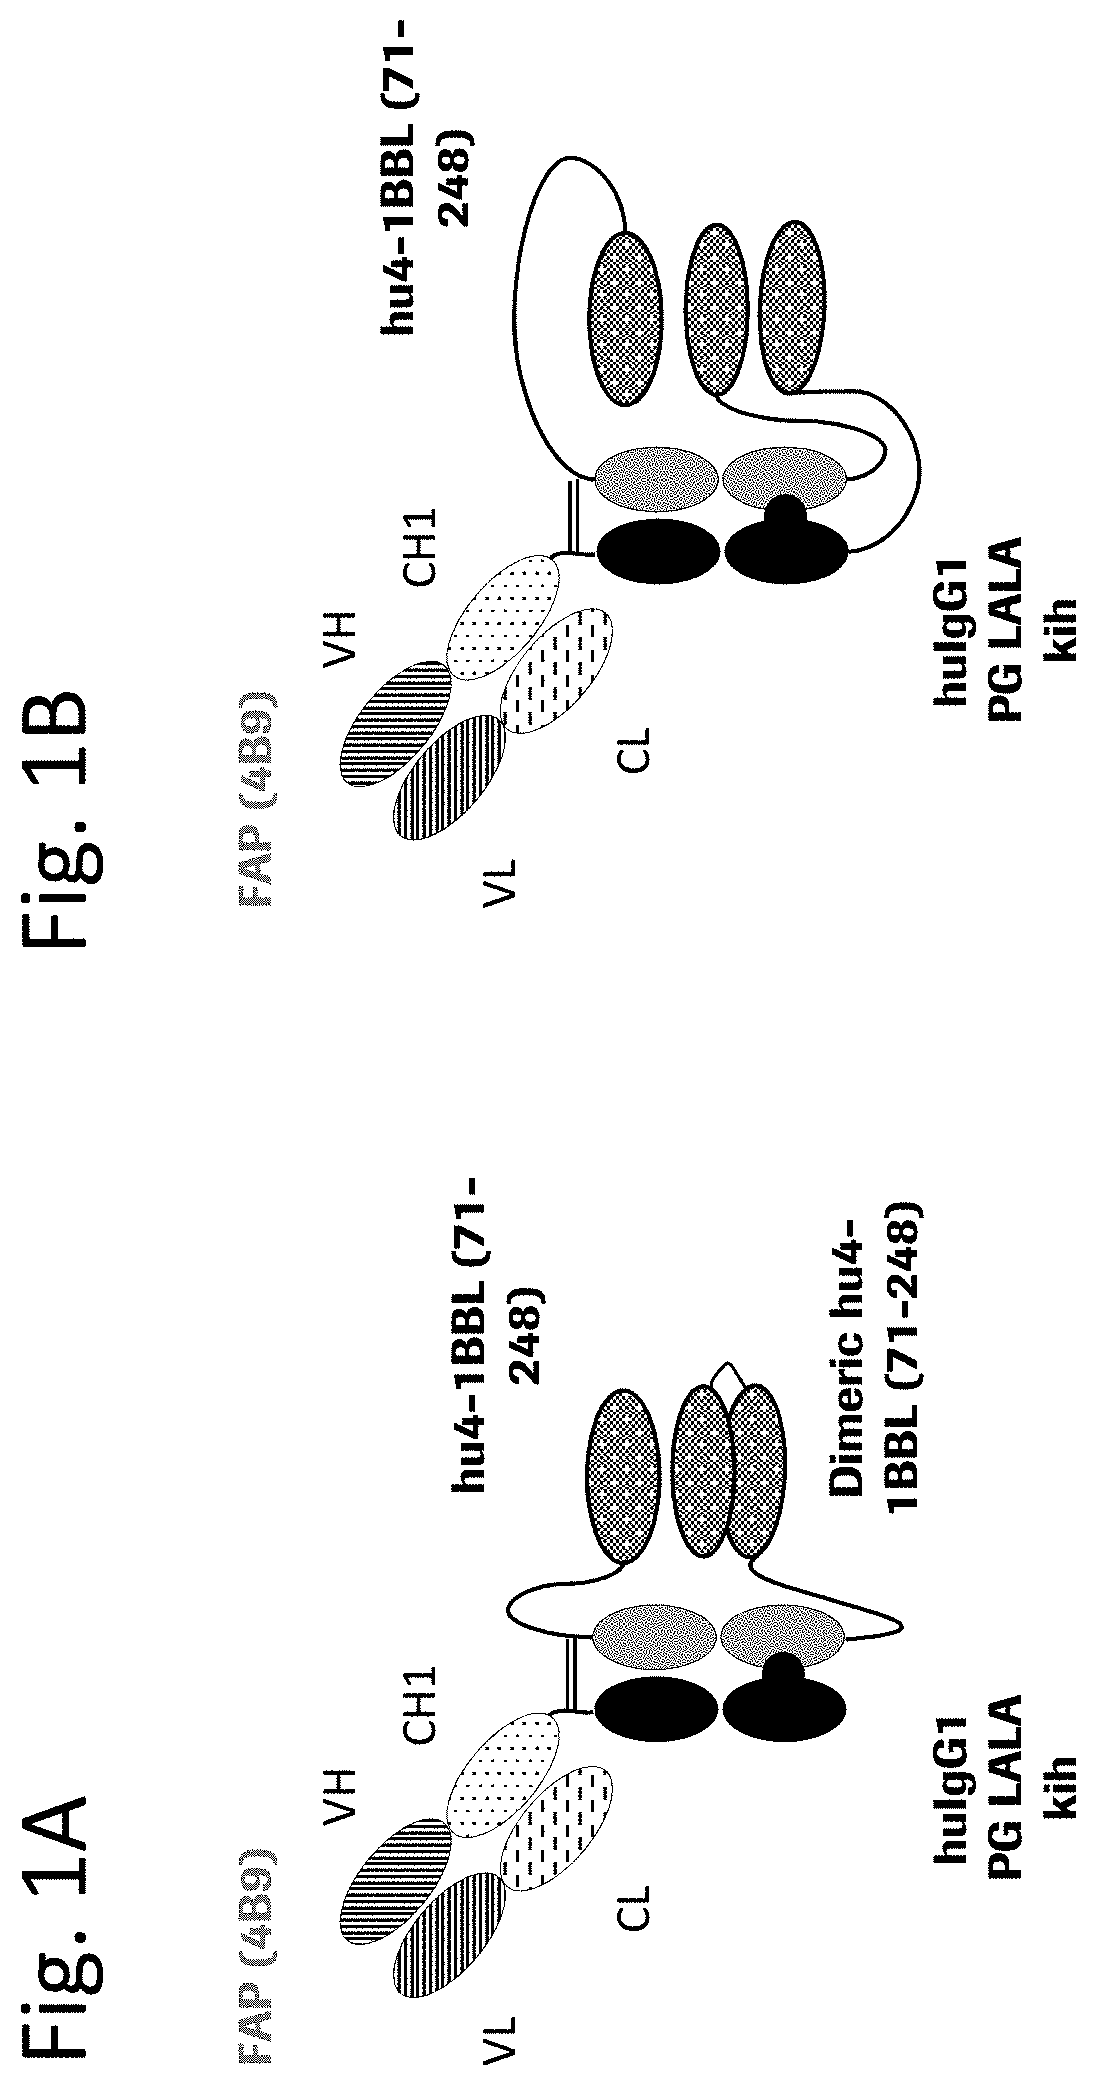 Novel TNF family ligand trimer-containing antigen binding molecules